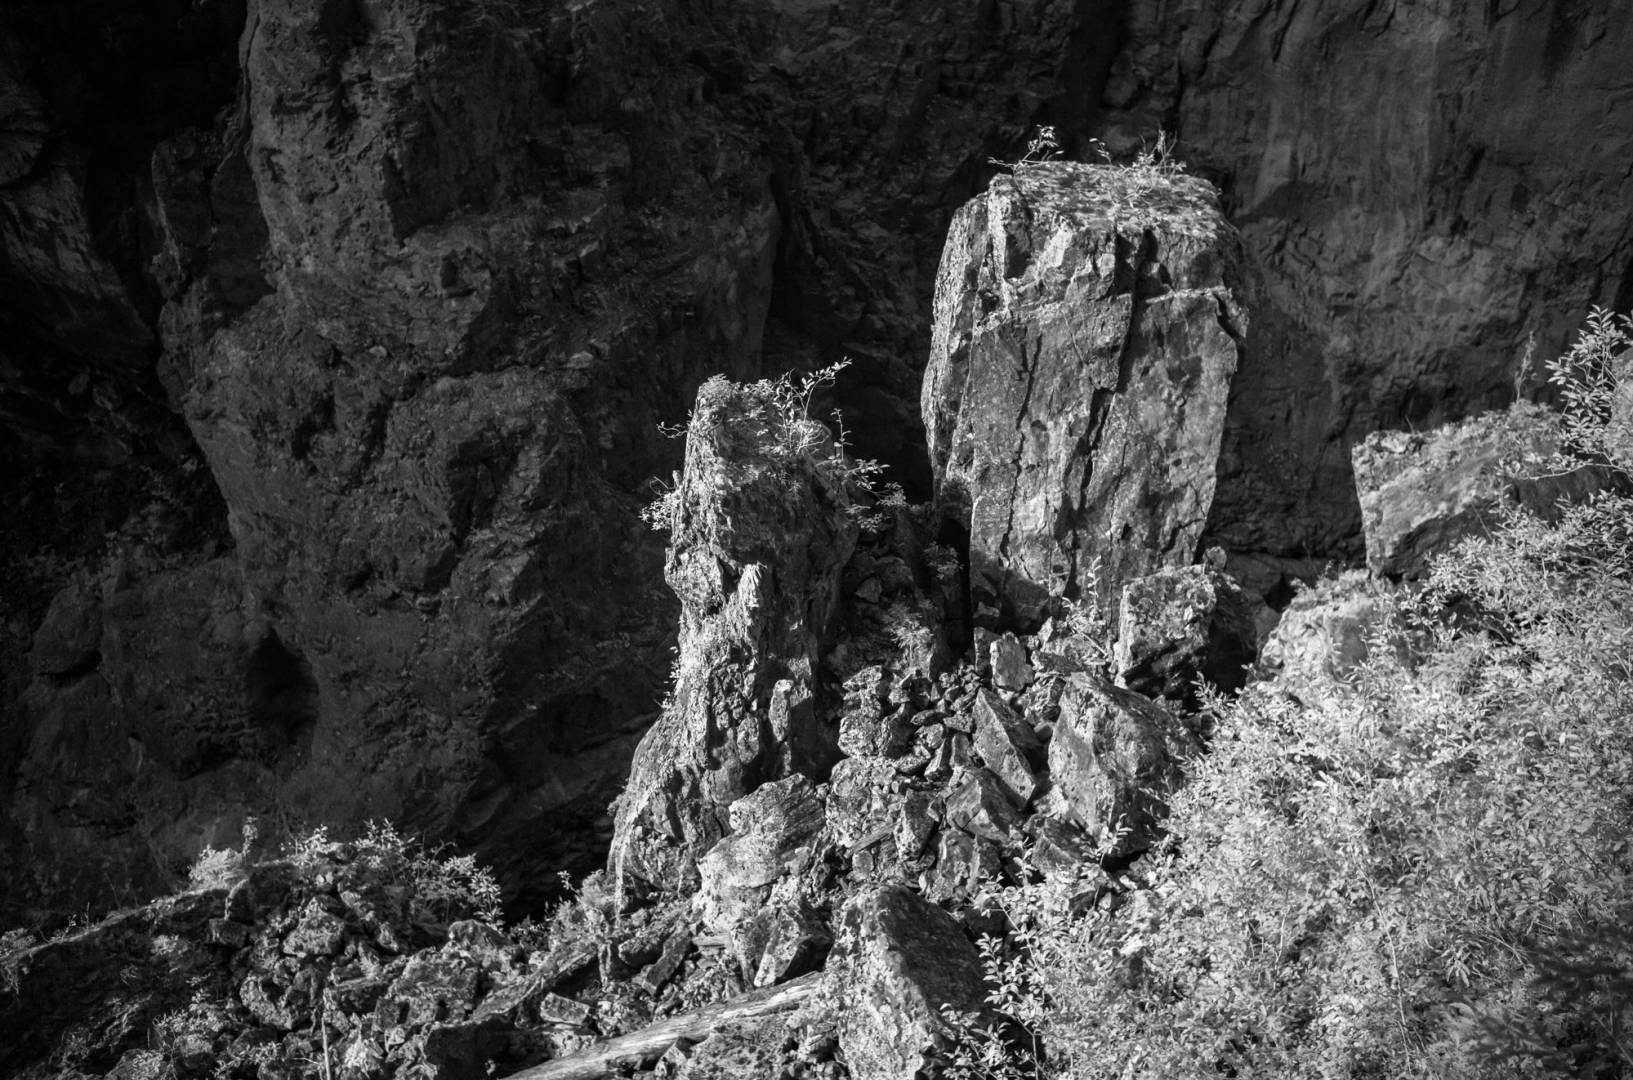 Rockfall, Breitach-Klamm. Leica M10-M with 35mm Summilux-M, 1/125s, f/2.8, ISO 6400, infraref filter 715